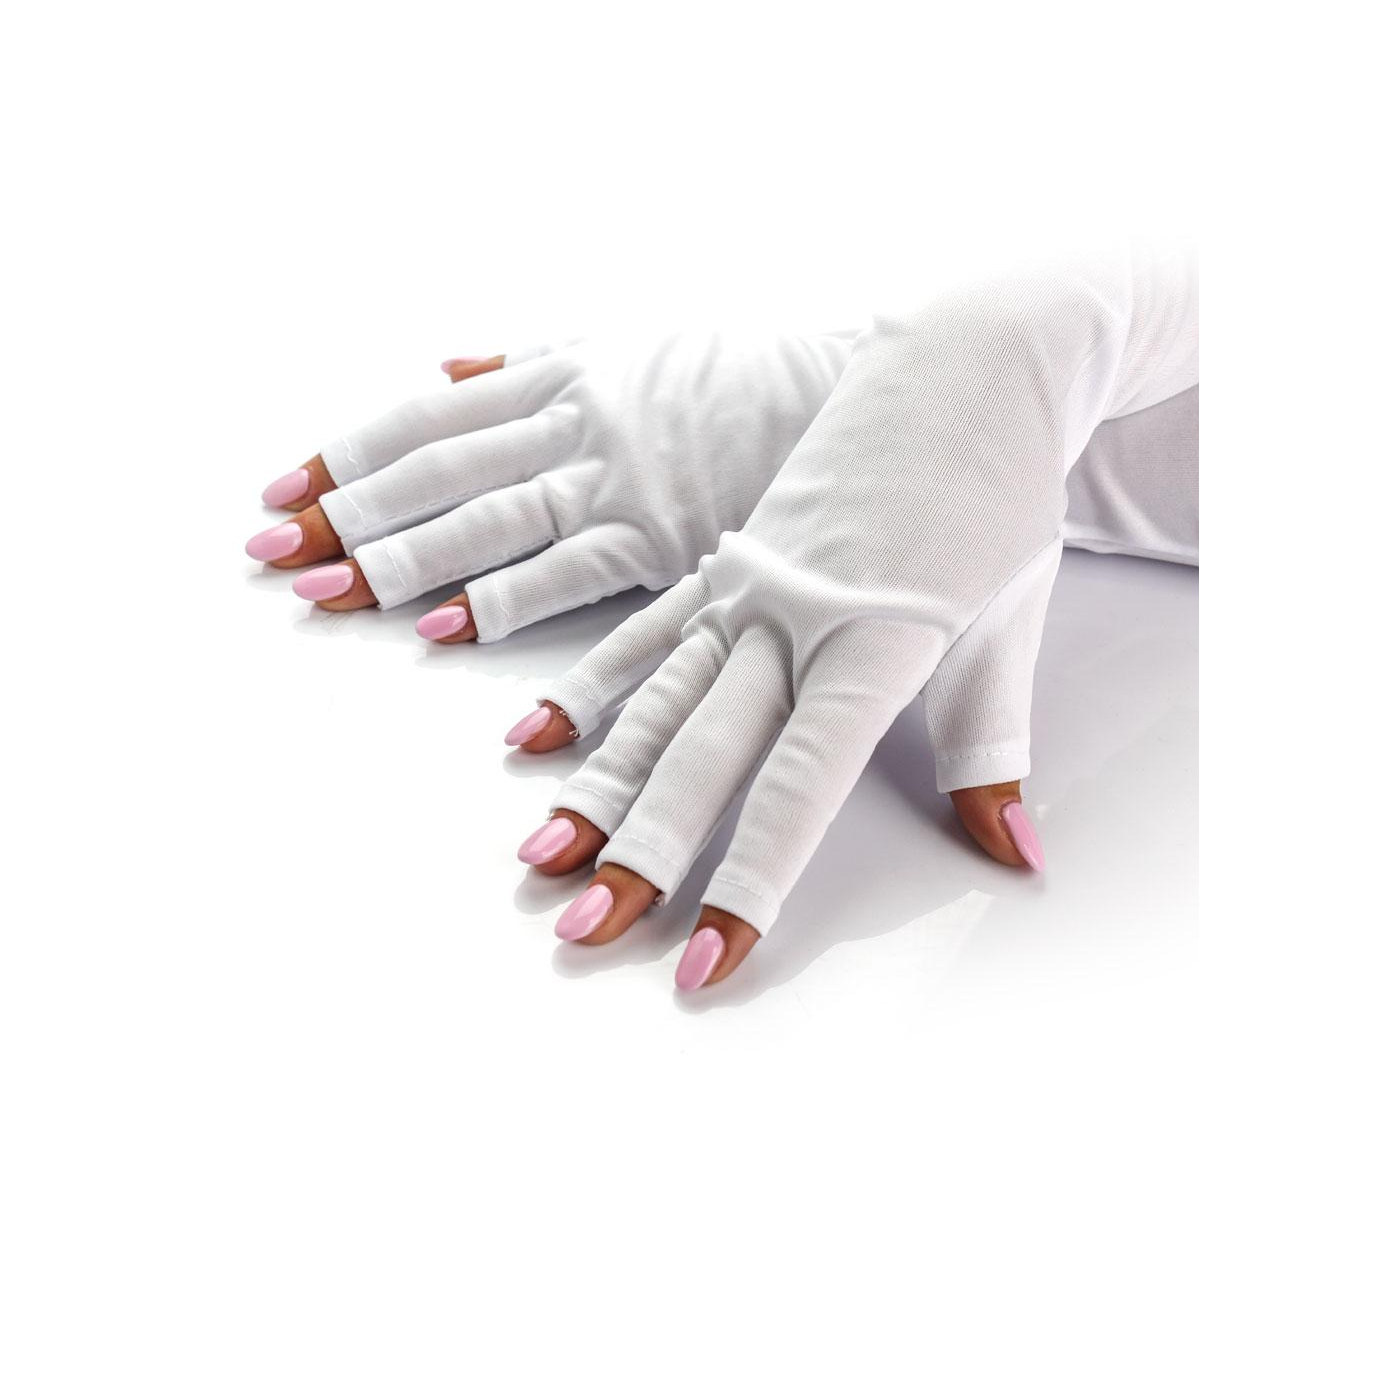 Gants de manucure protection UV extensible respirant doigts en